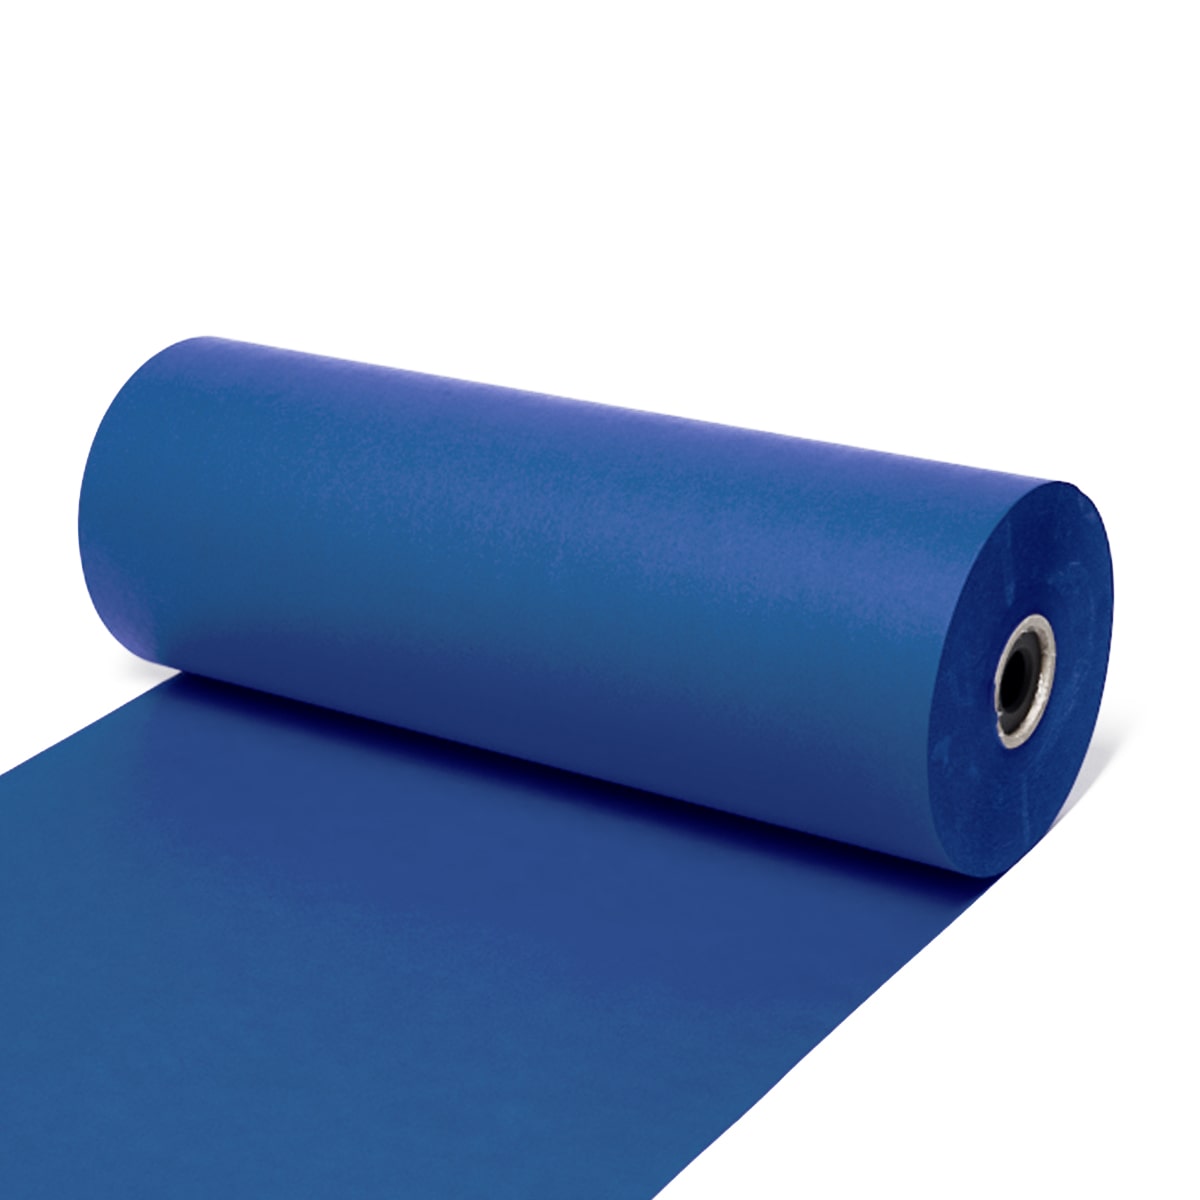 Seidenpapier Blau, 50 / 75 cm breit, 500 Meter / Rolle